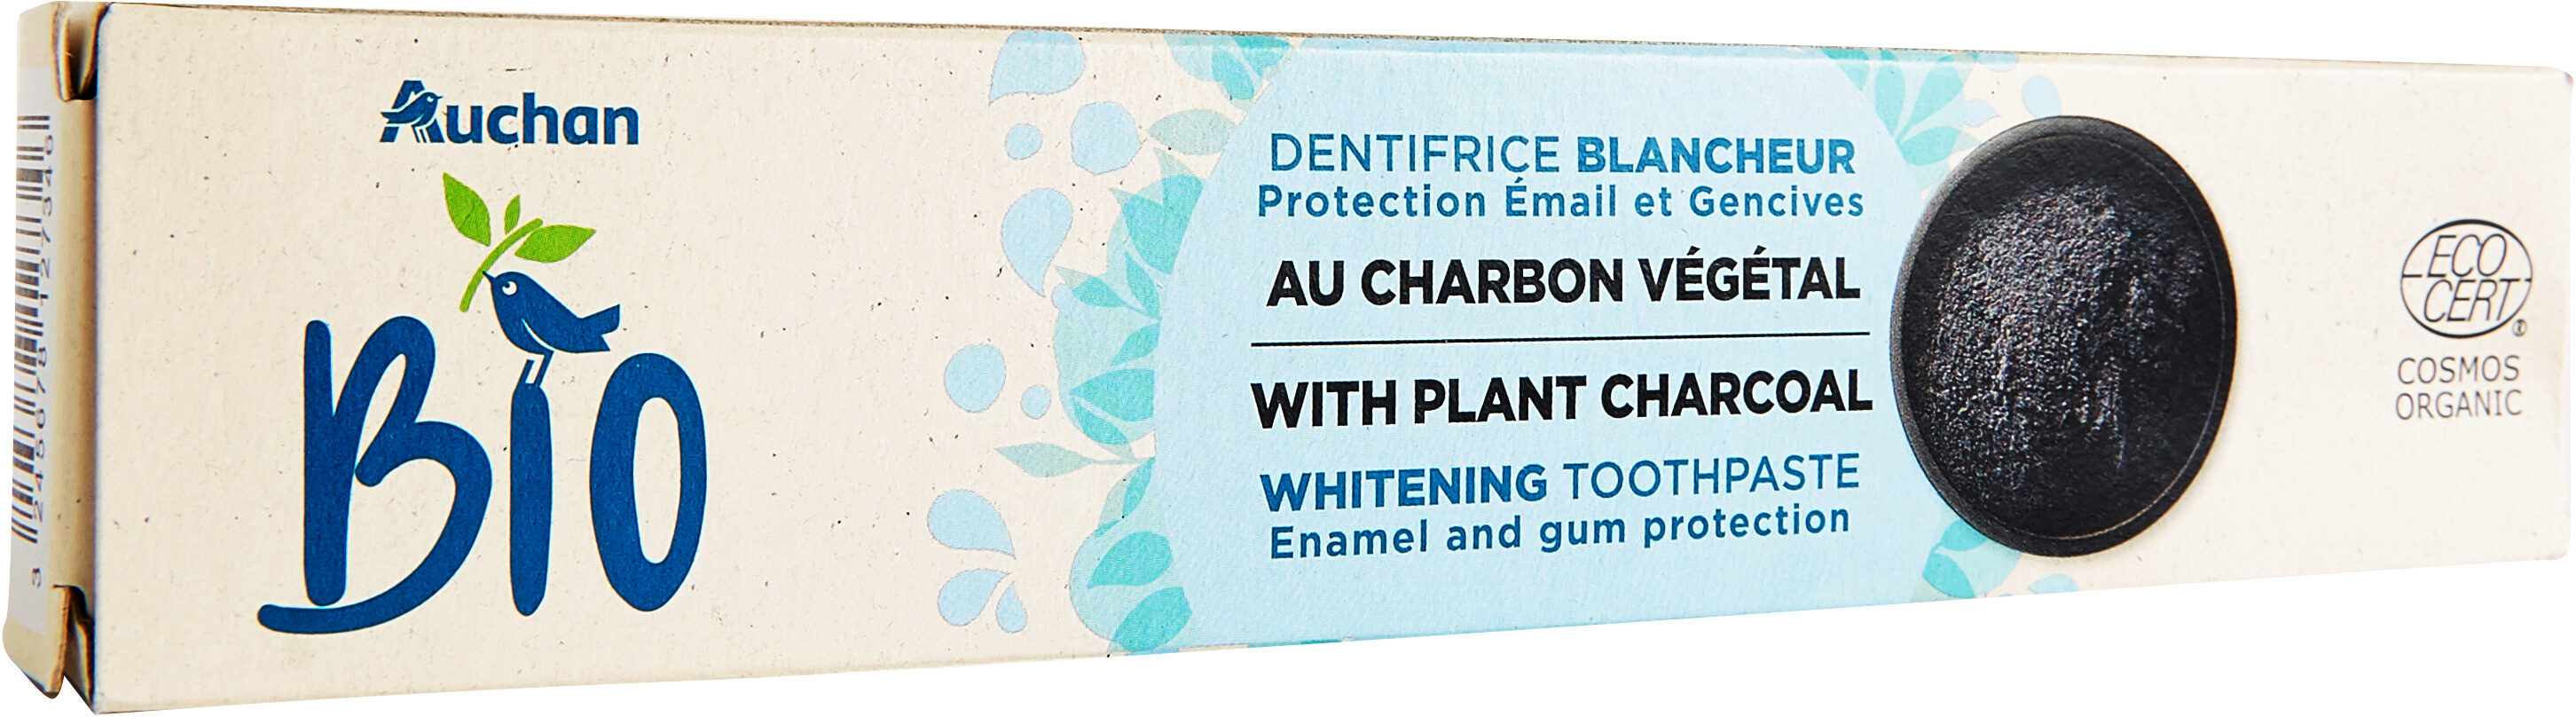 Dentifrice blancheur au charbon vegetal - 製品 - fr